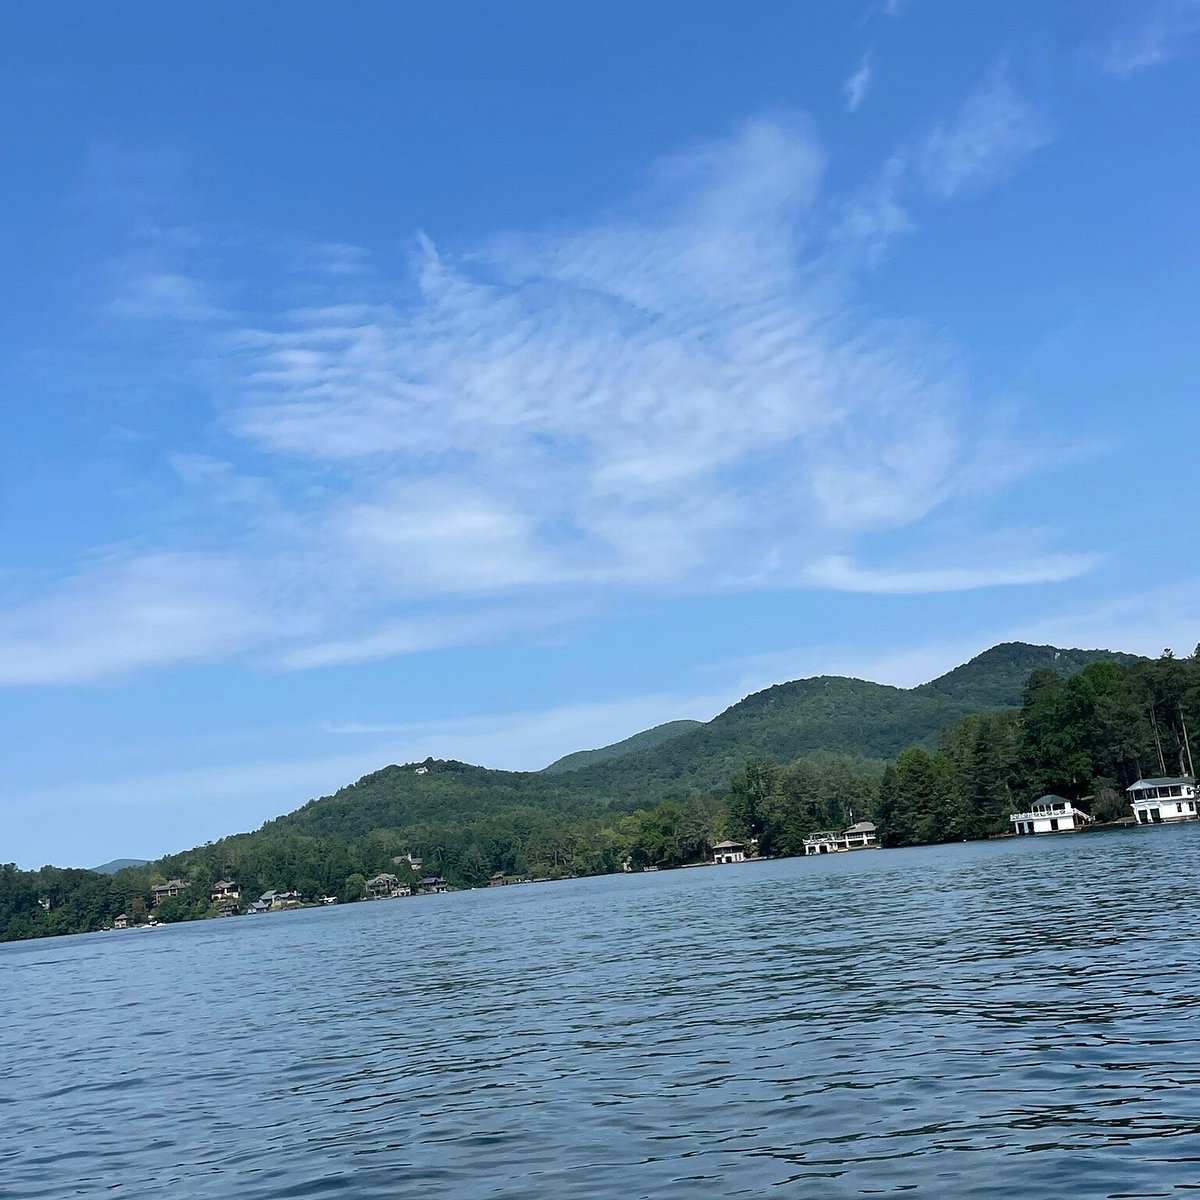 Lake days heal the soul!

📸 google images
📍Lake Burton, GA

#lakeburton #lakeburtongeorgia #lakeburtonhomes #lakeburtonga #lakeburtonrealestate #lakeburtonsunset #lakebutronliving